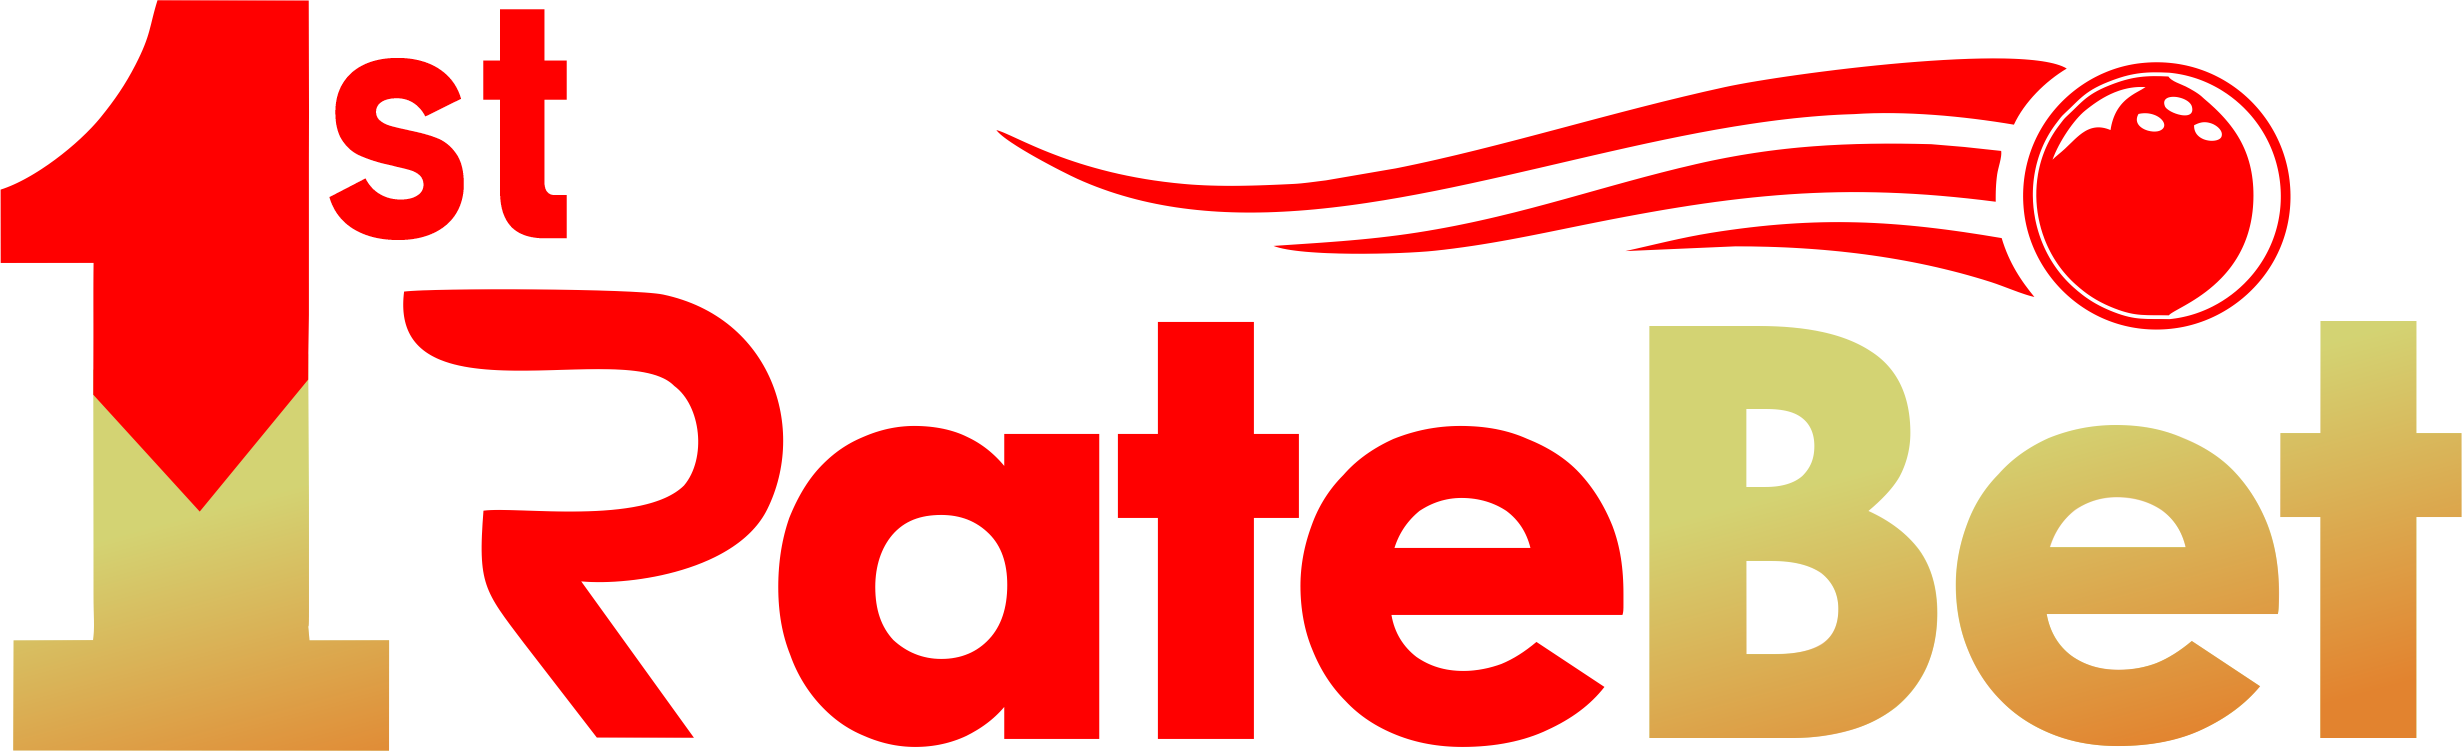 1stRateBet Book Logo